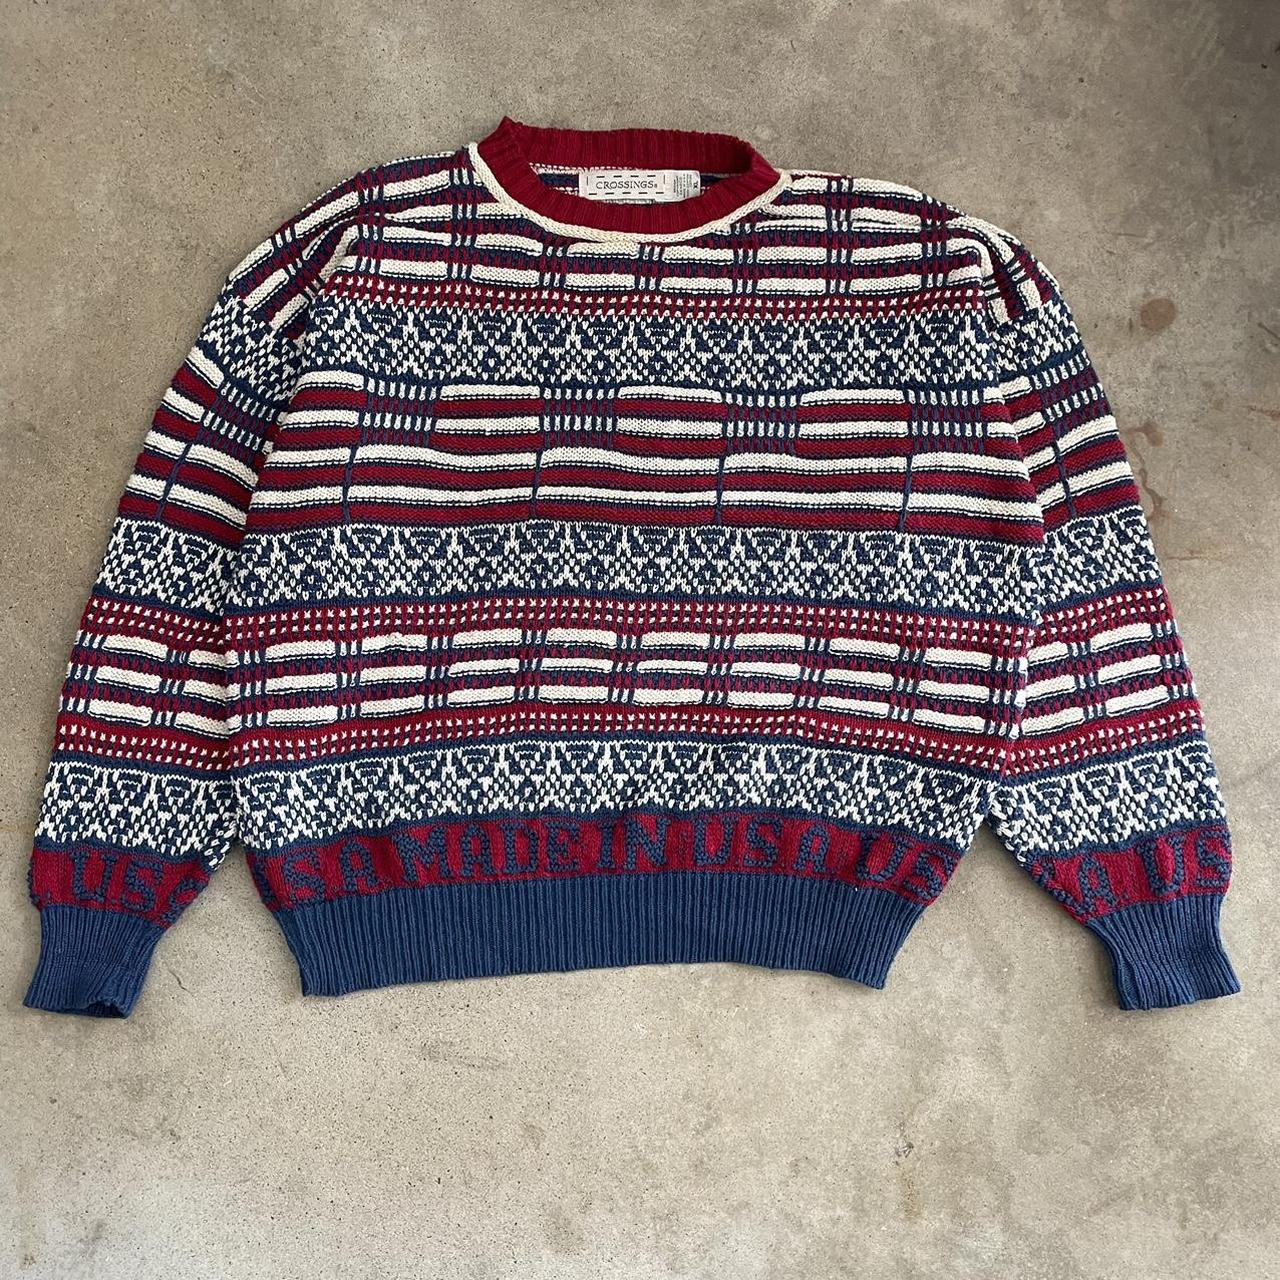 Insane vintage knit sweater Coogi like Size xl Made... - Depop